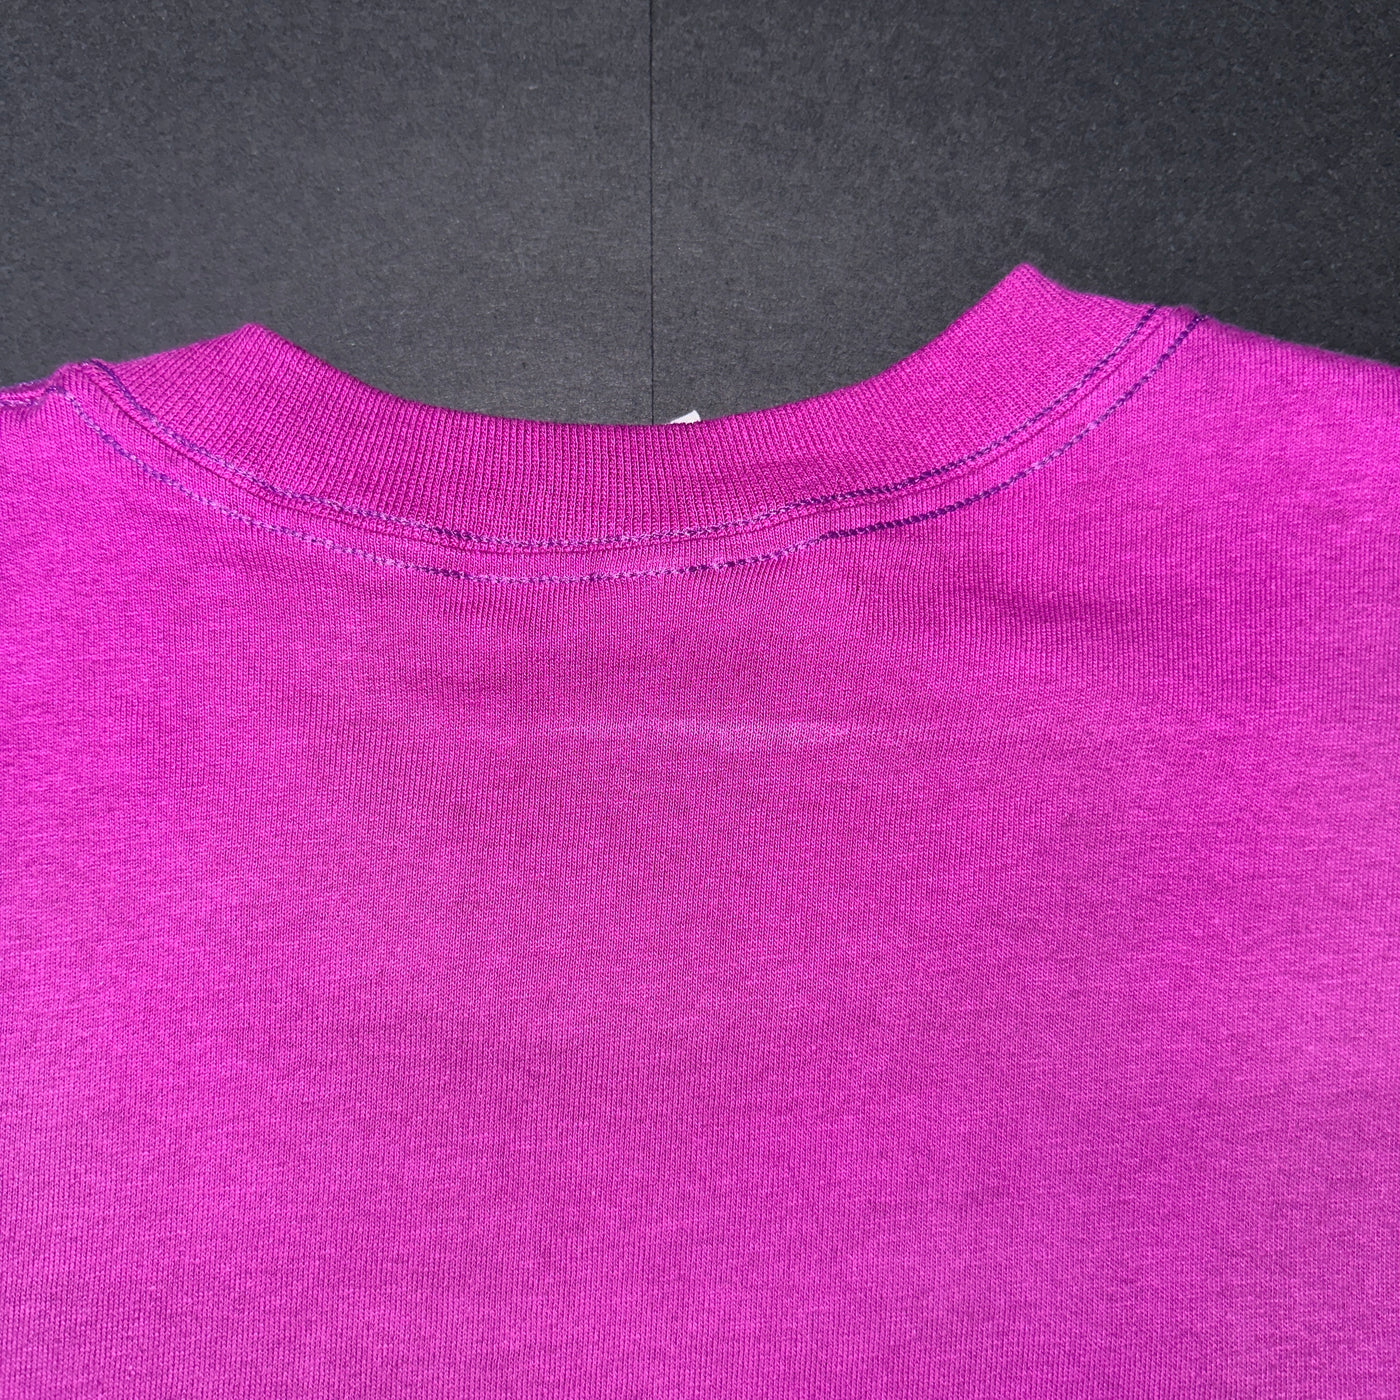 '96 Six Flags Batman The Ride Pink T-shirt sz L